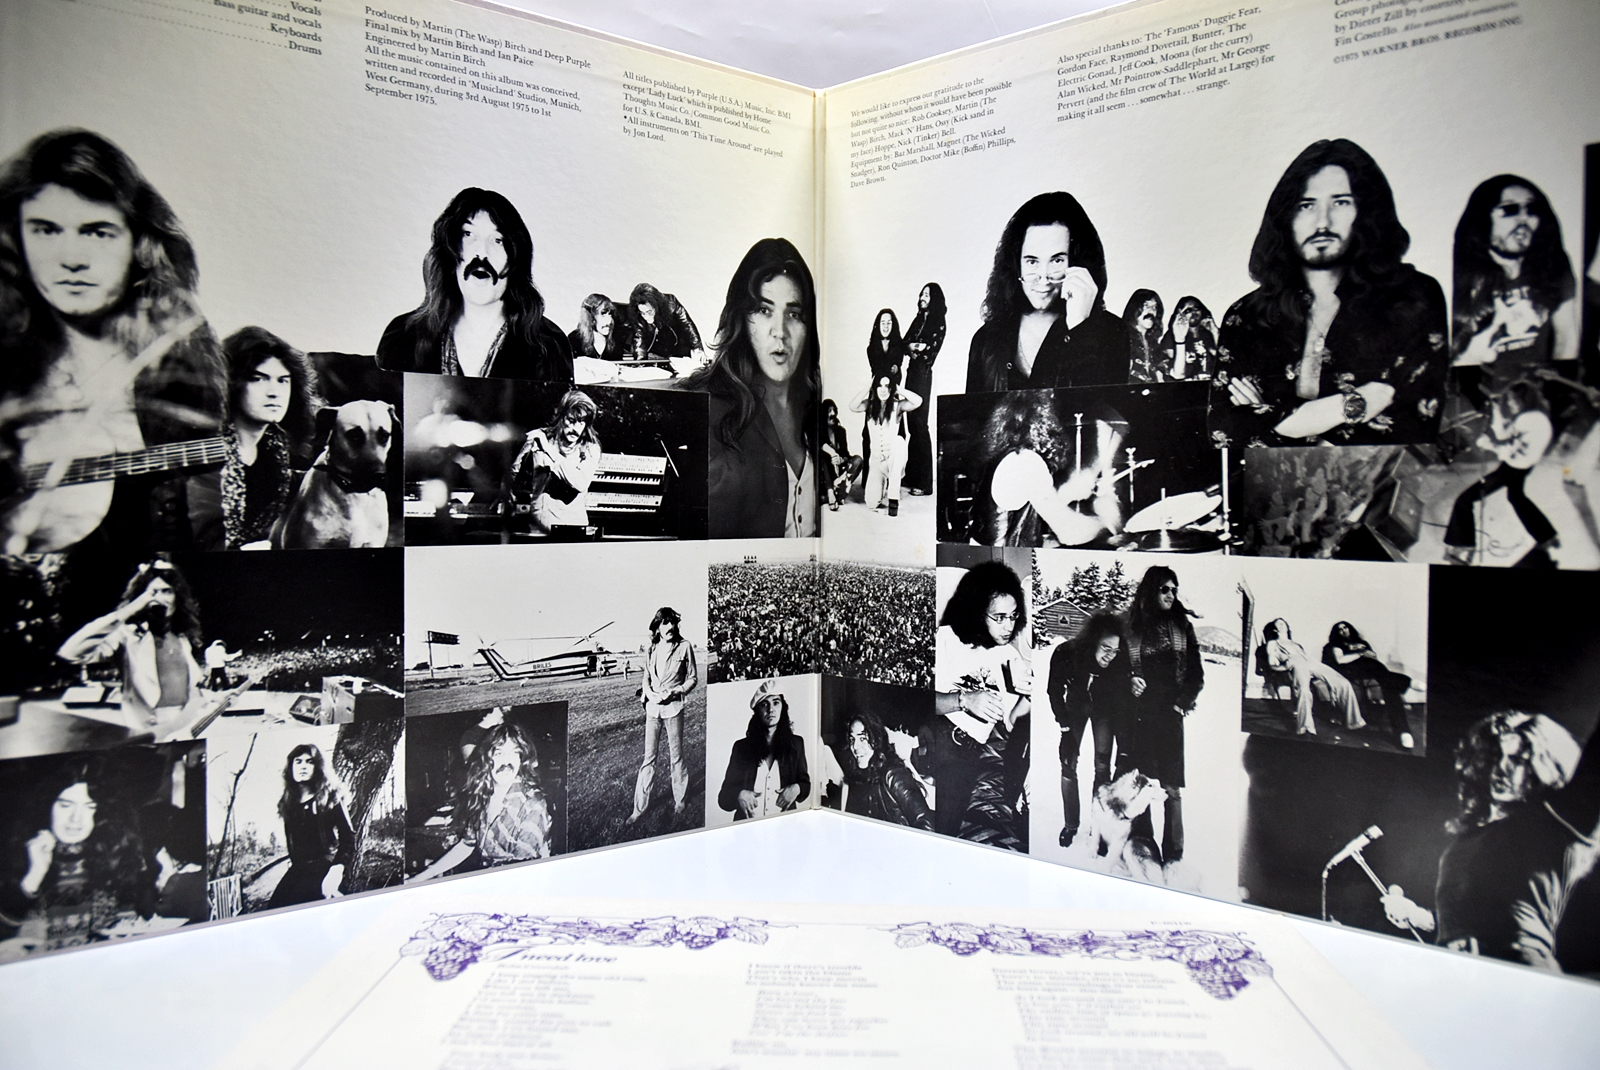 Deep Purple [딥 퍼플] - Come Taste The Band - 중고 수입 오리지널 아날로그 LP